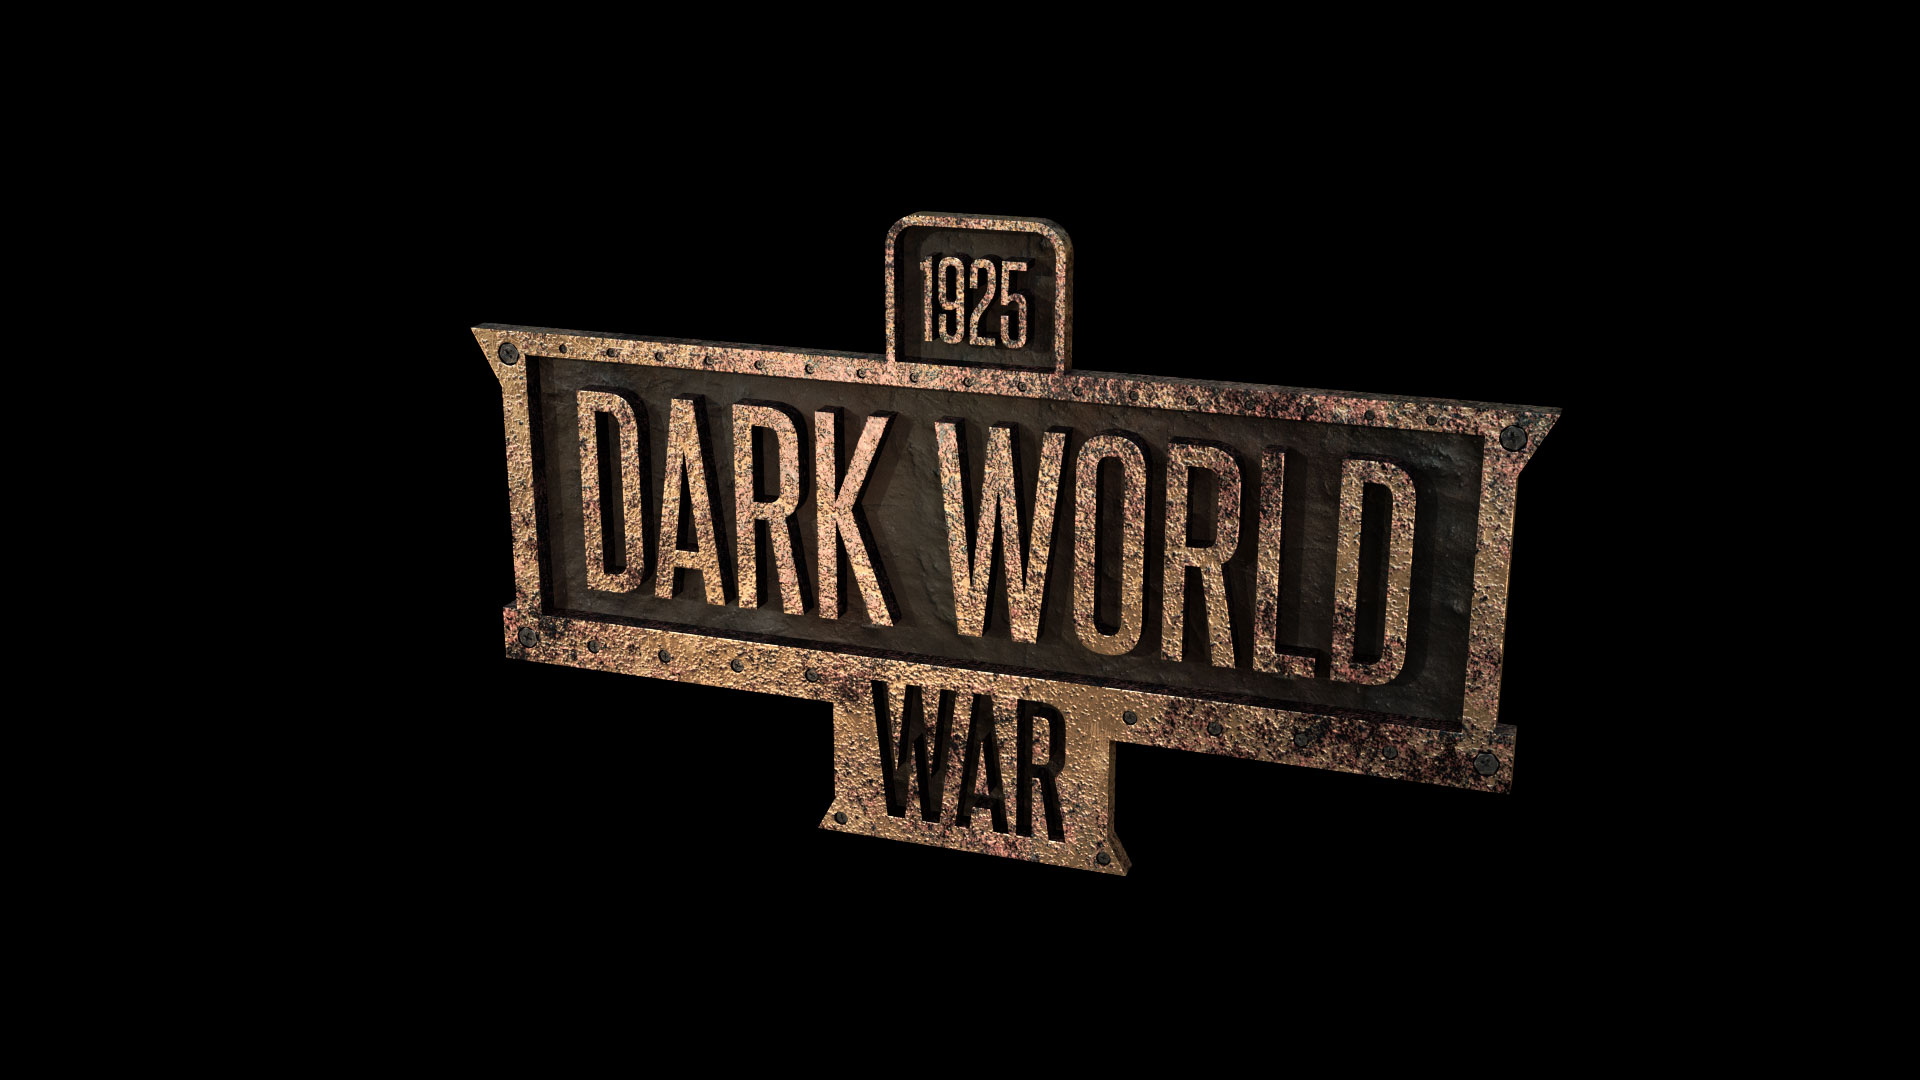 Coming soon to Slave 2 Gaming’s Dark World War